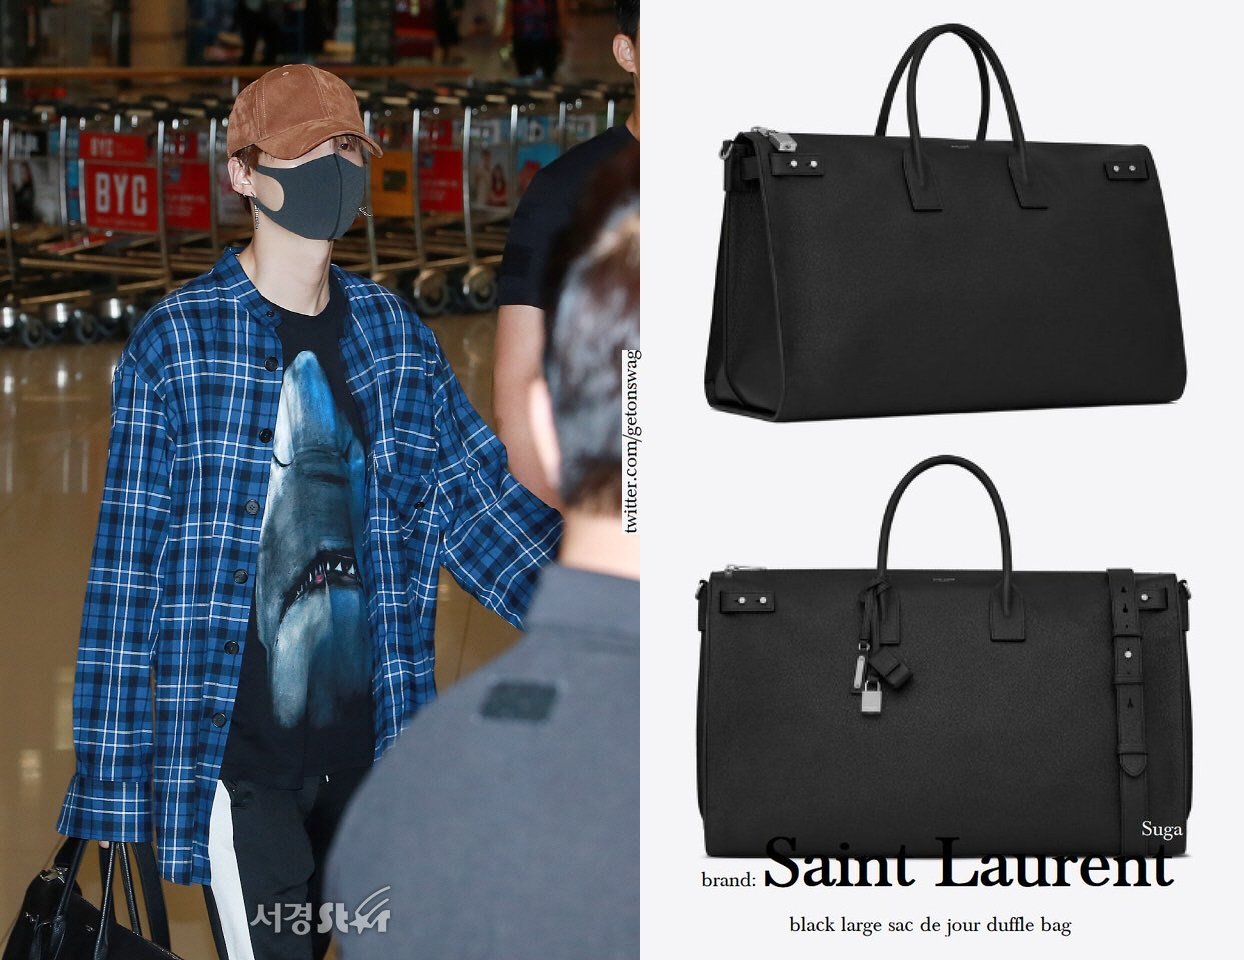 Beyond The Style ✼ Alex ✼ na X: „SUGA #SUGA 180629 airport #BTS #방탄소년단 #민윤기  SAINT LAURENT large Sac De Jour duffle bag gift 🎁from @Baidu_suga_bar   / X